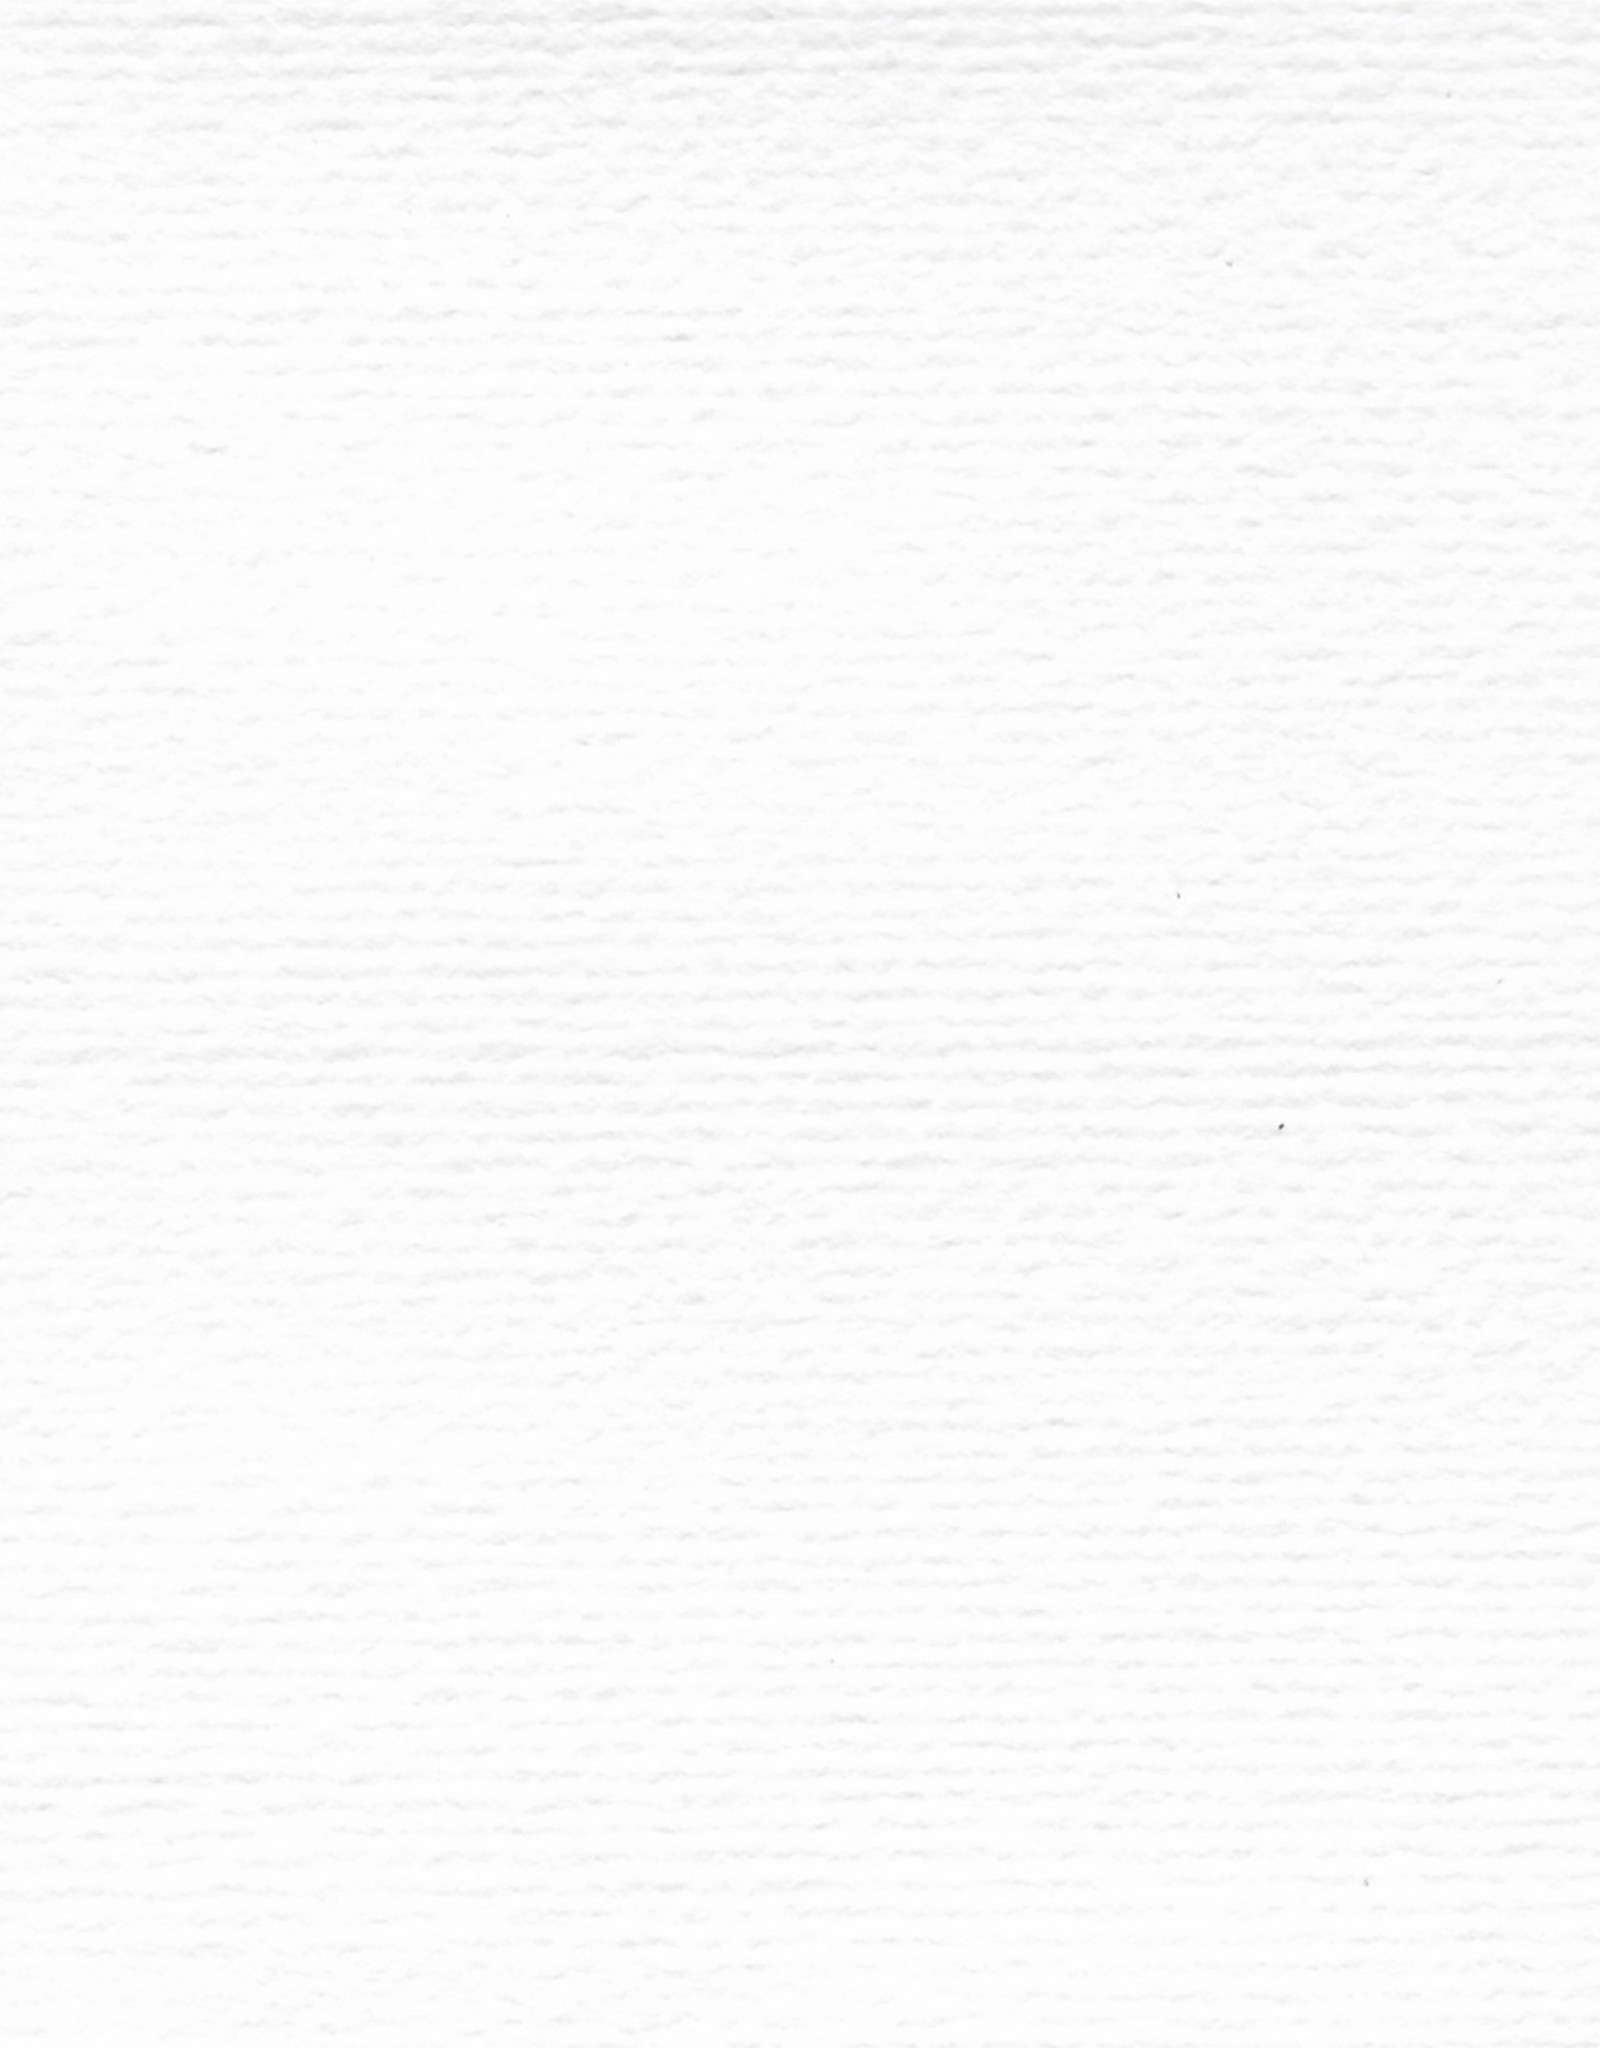 Hahnemuhle Ingres Antique, #100 White, 18.75" x 24.75", 100gsm